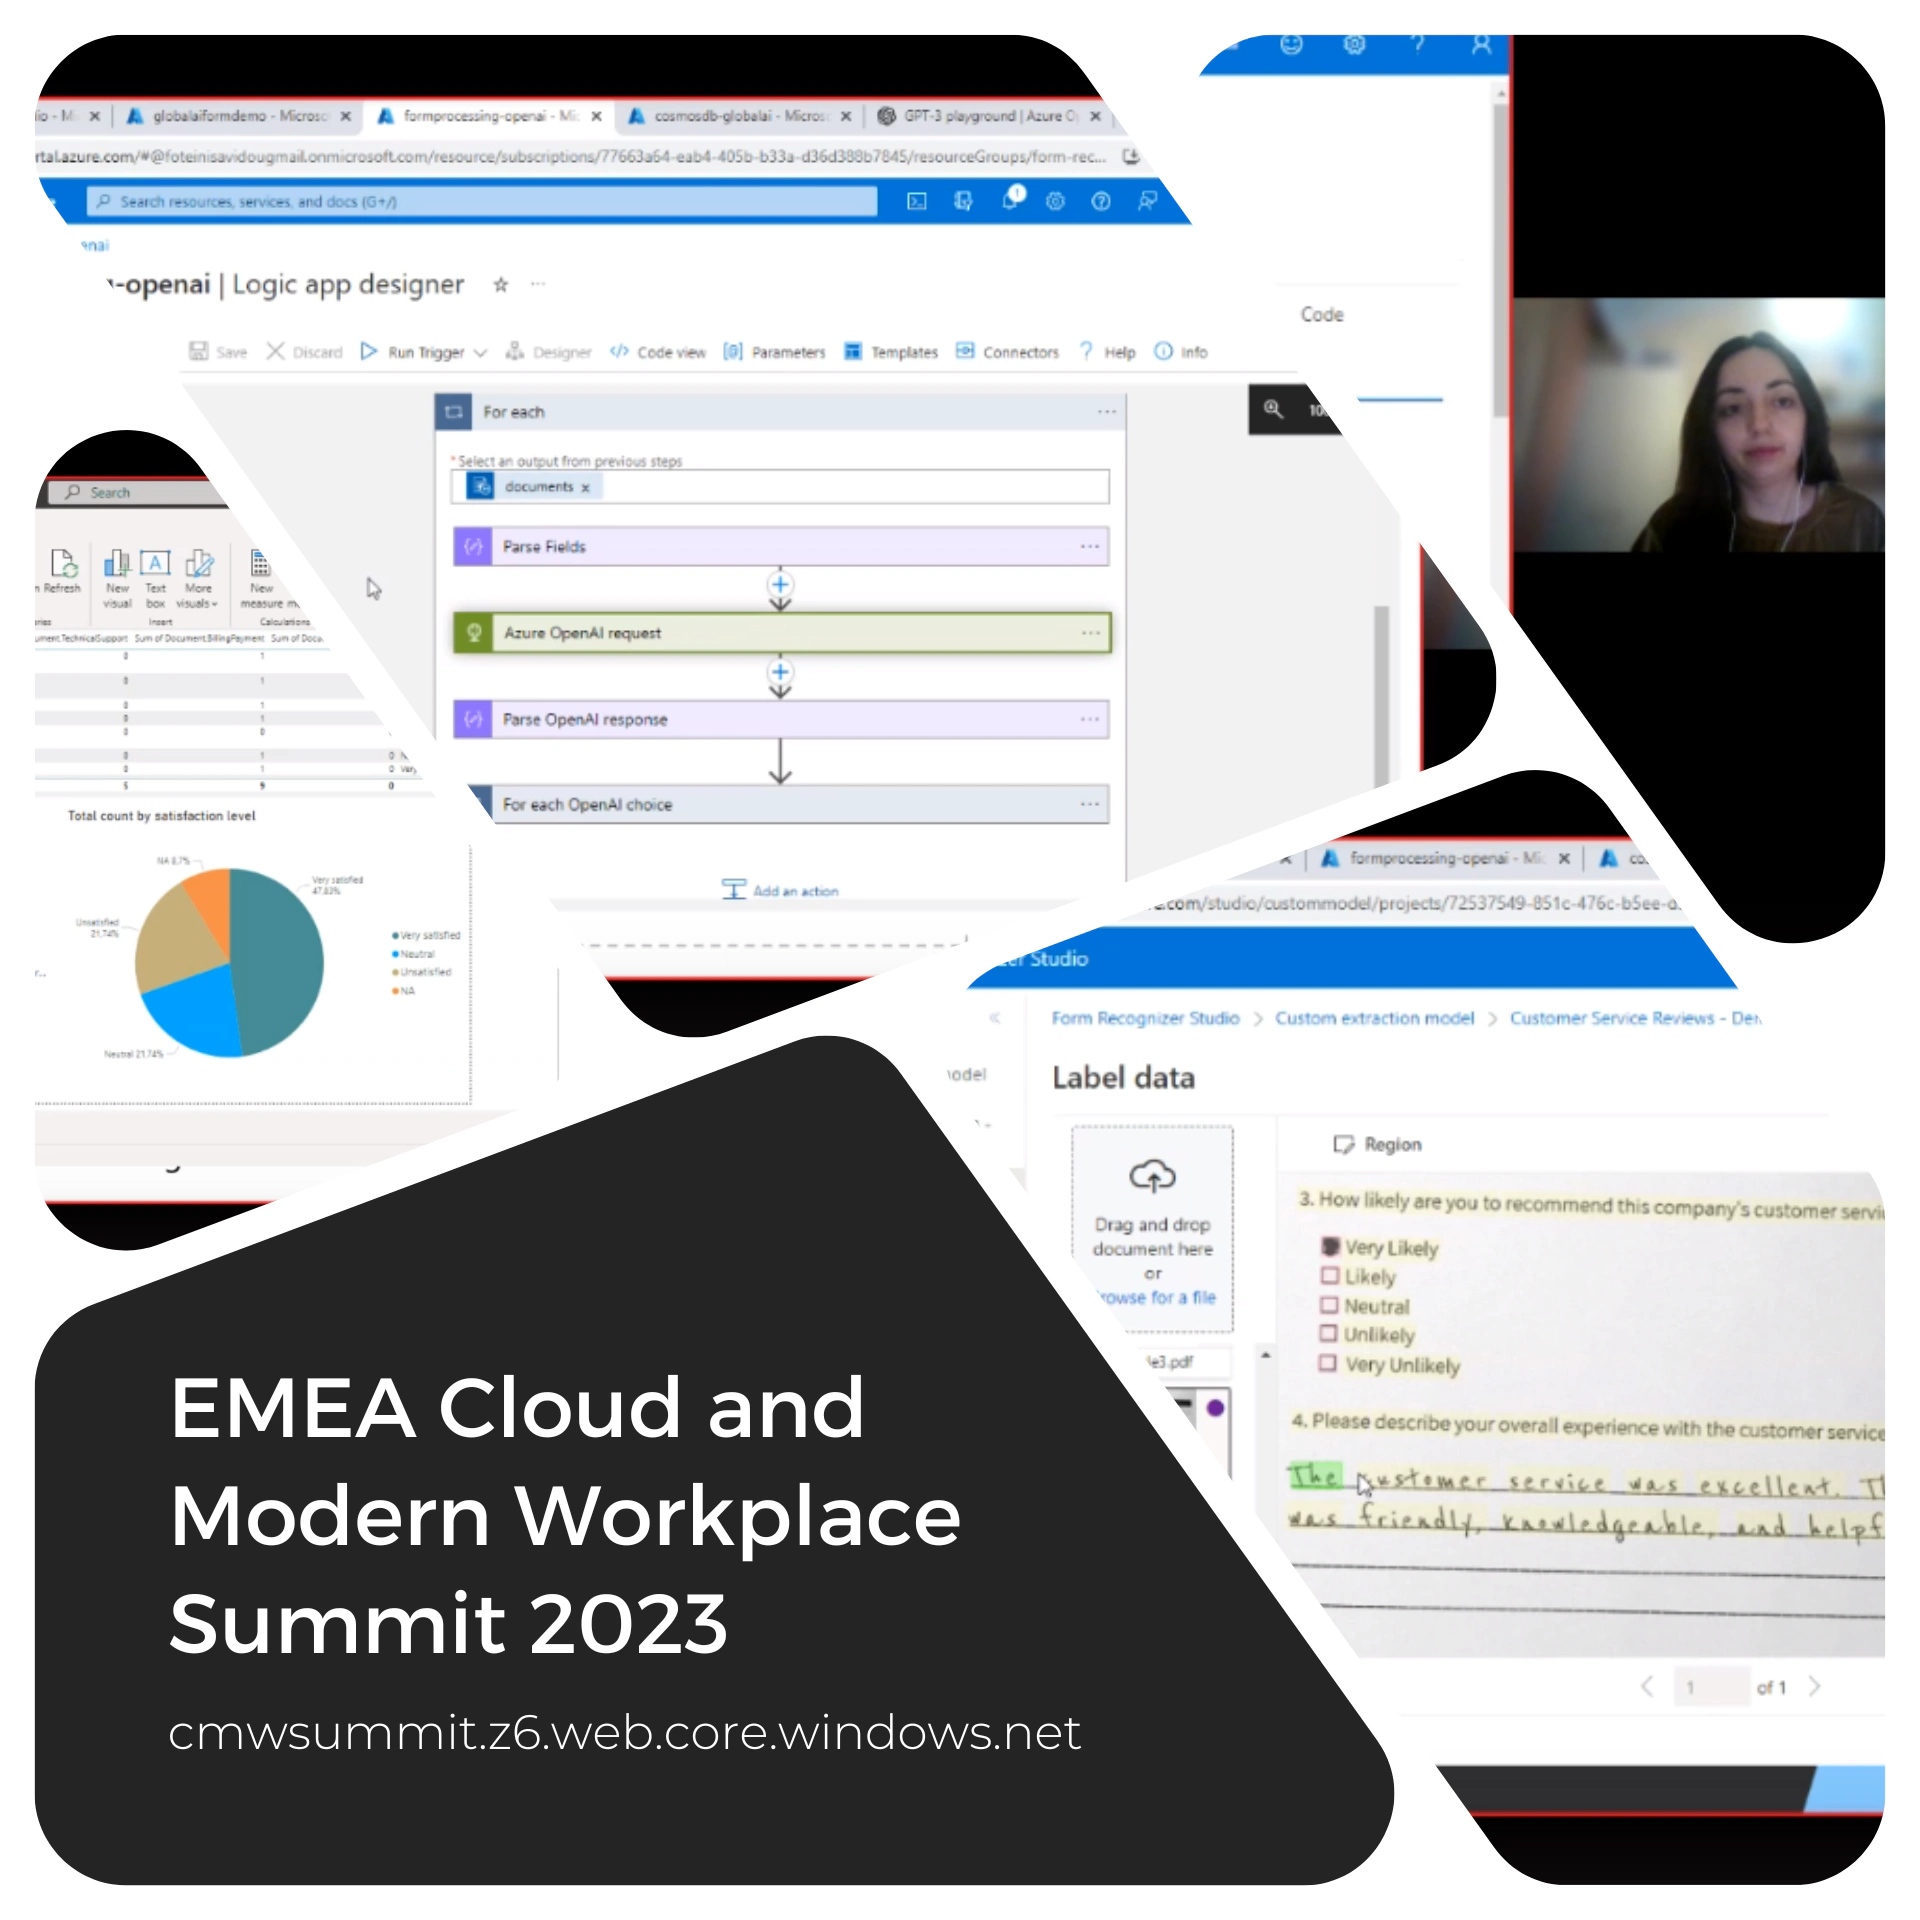 EMEA Cloud and Modern Workplace Summit 2023